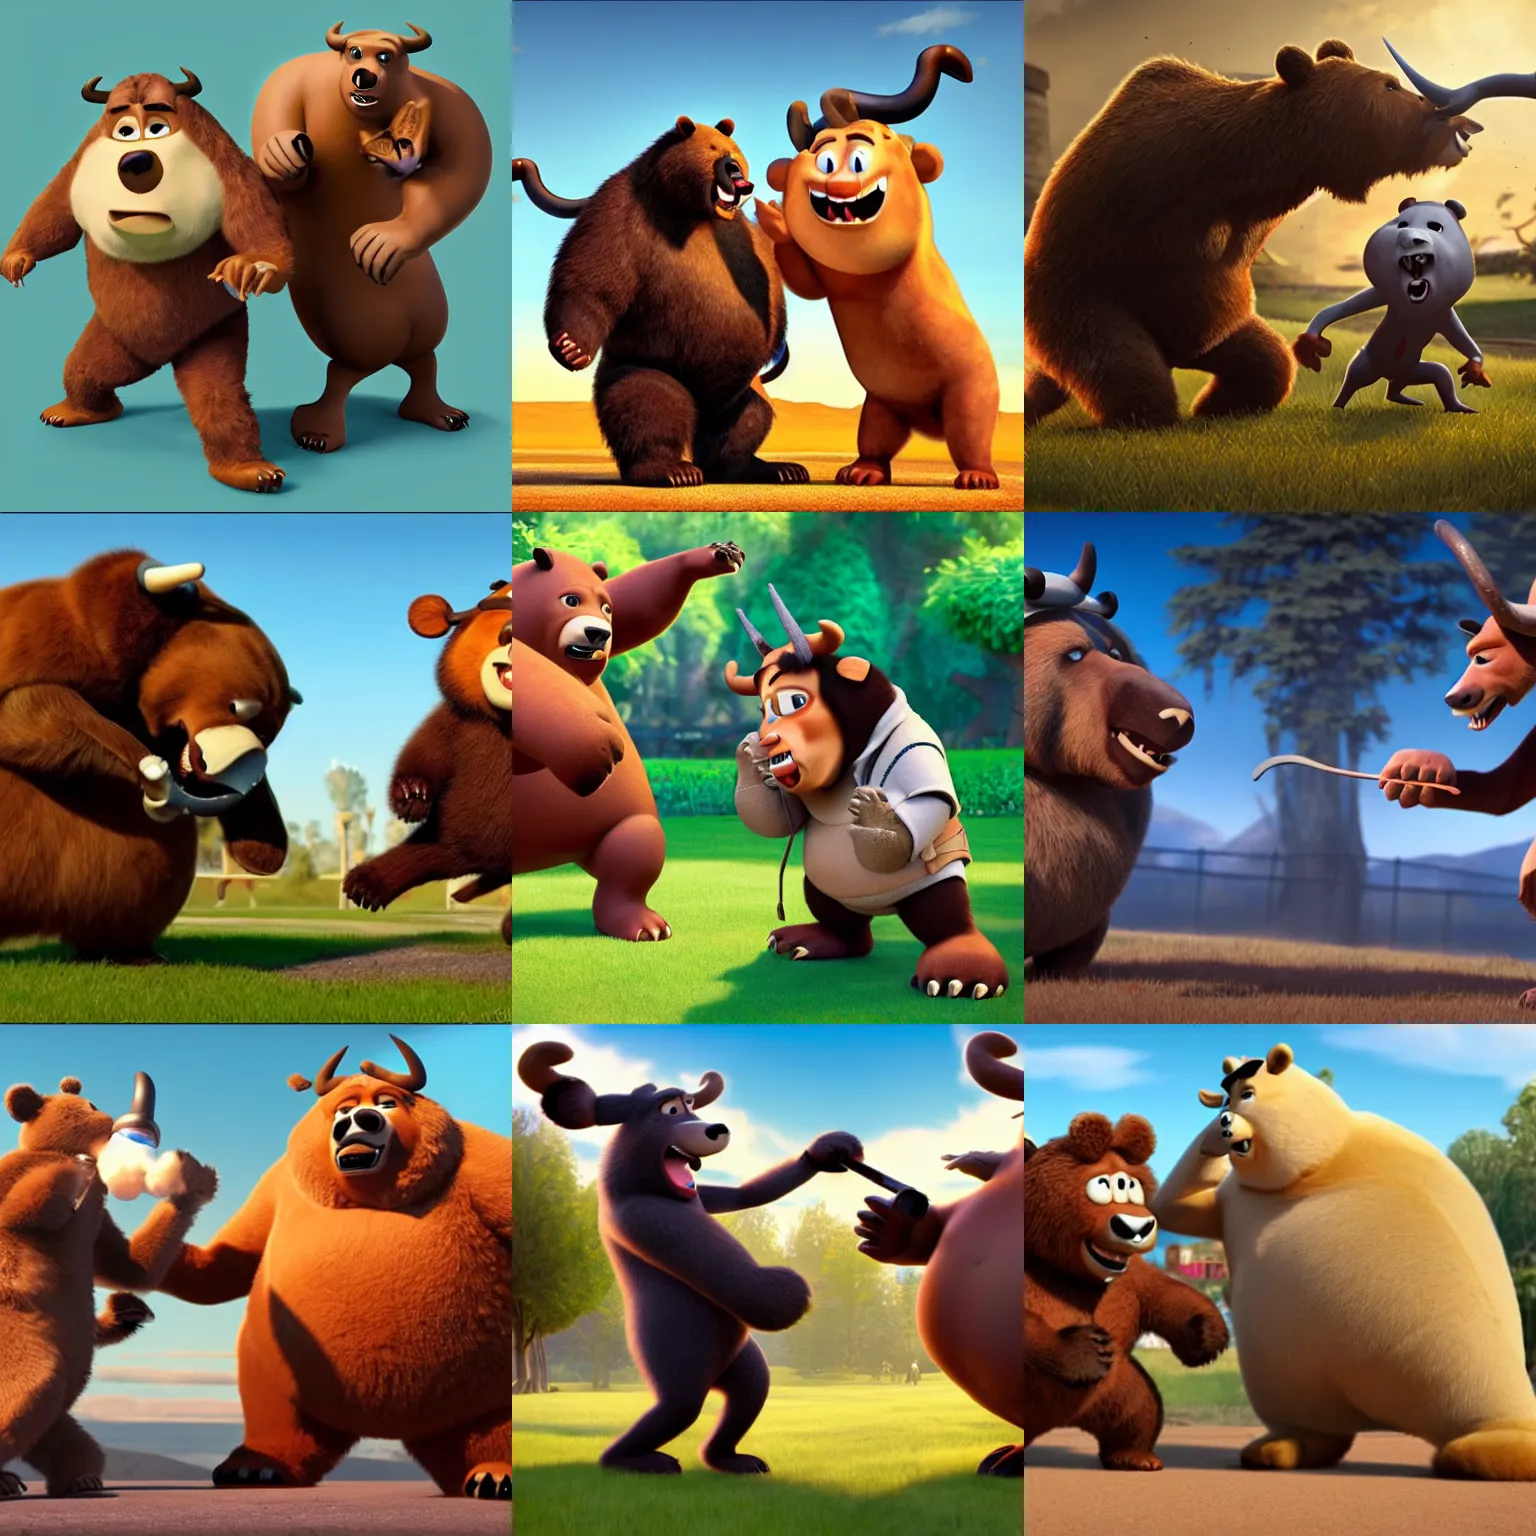 Prompt: anthropomorphic bear fighting an anthropomorphic bull, Pixar style